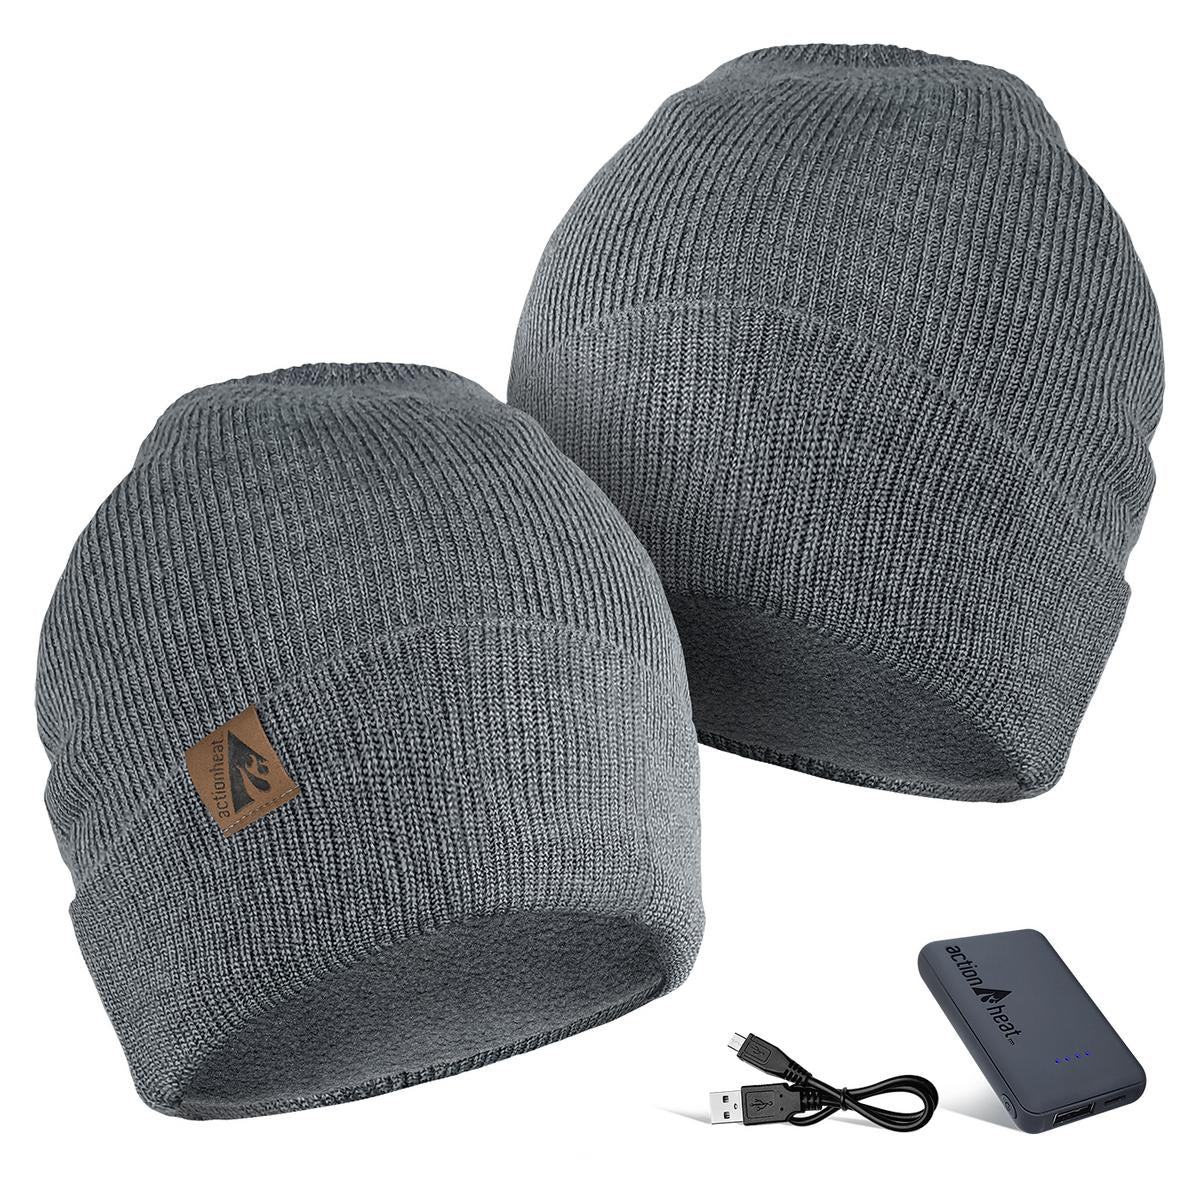 ActionHeat 5V Battery Heated Knit Hat - Back